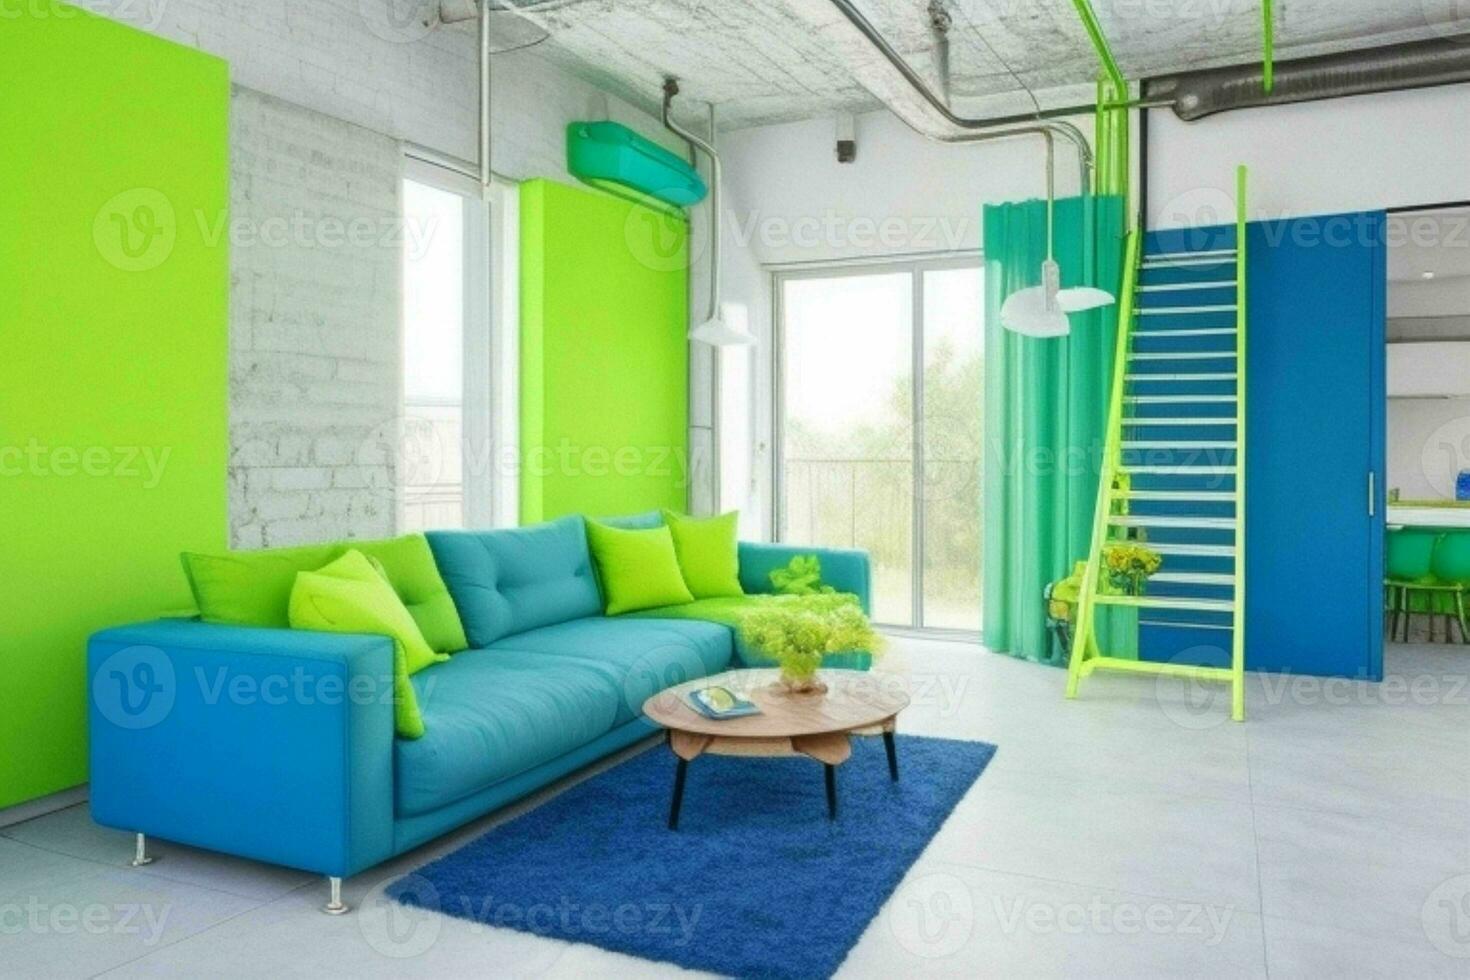 Modern industrial loft living room home interior. Pro Photo